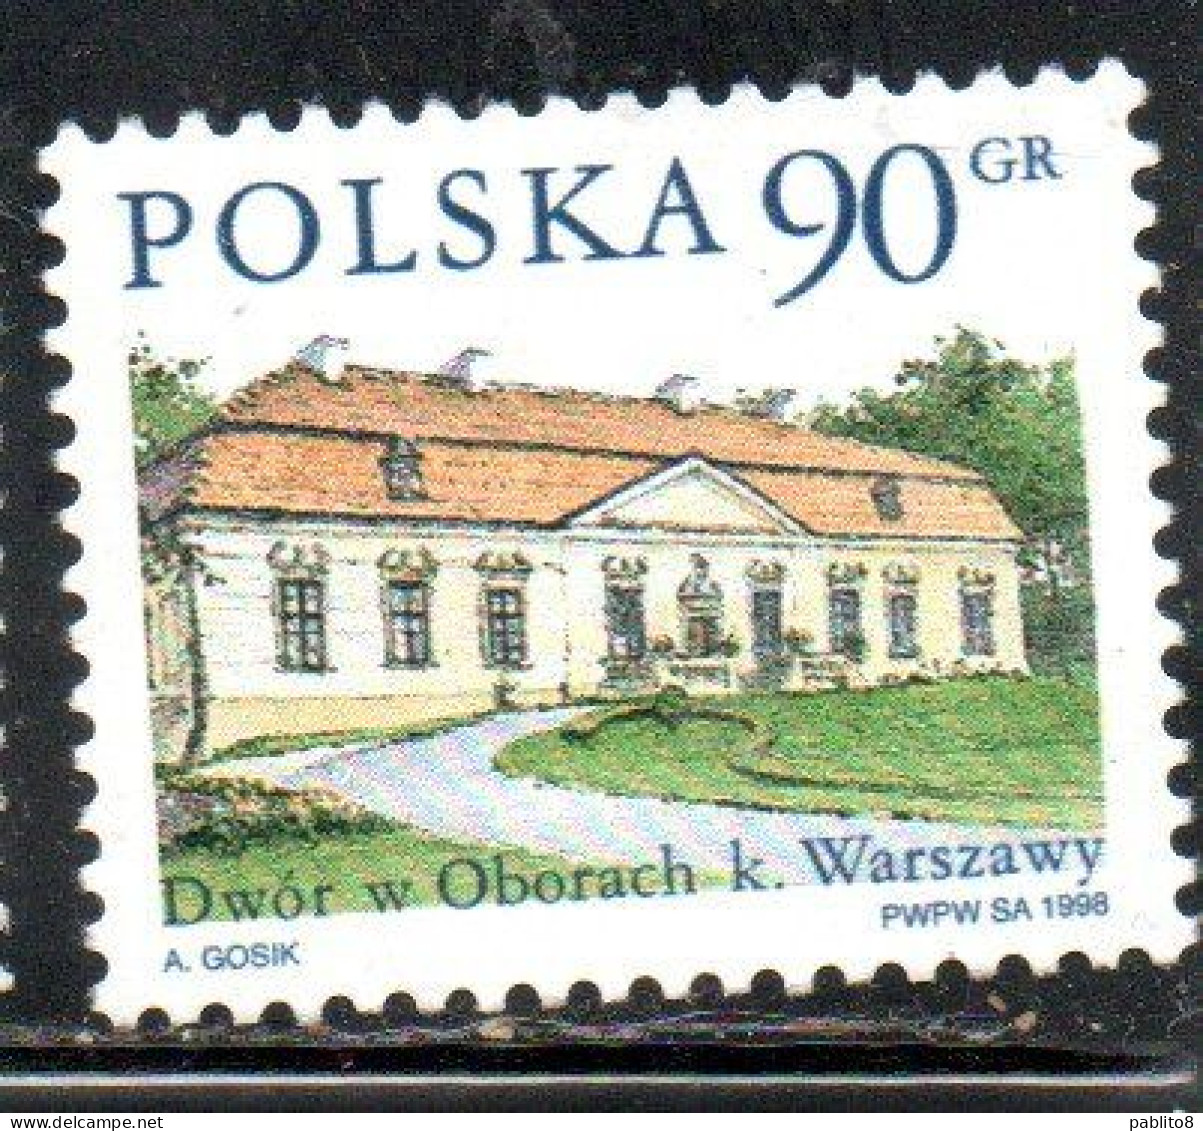 POLONIA POLAND POLSKA 1998 COUNTRY ESTATES OBORACH 90g MNH - Nuevos